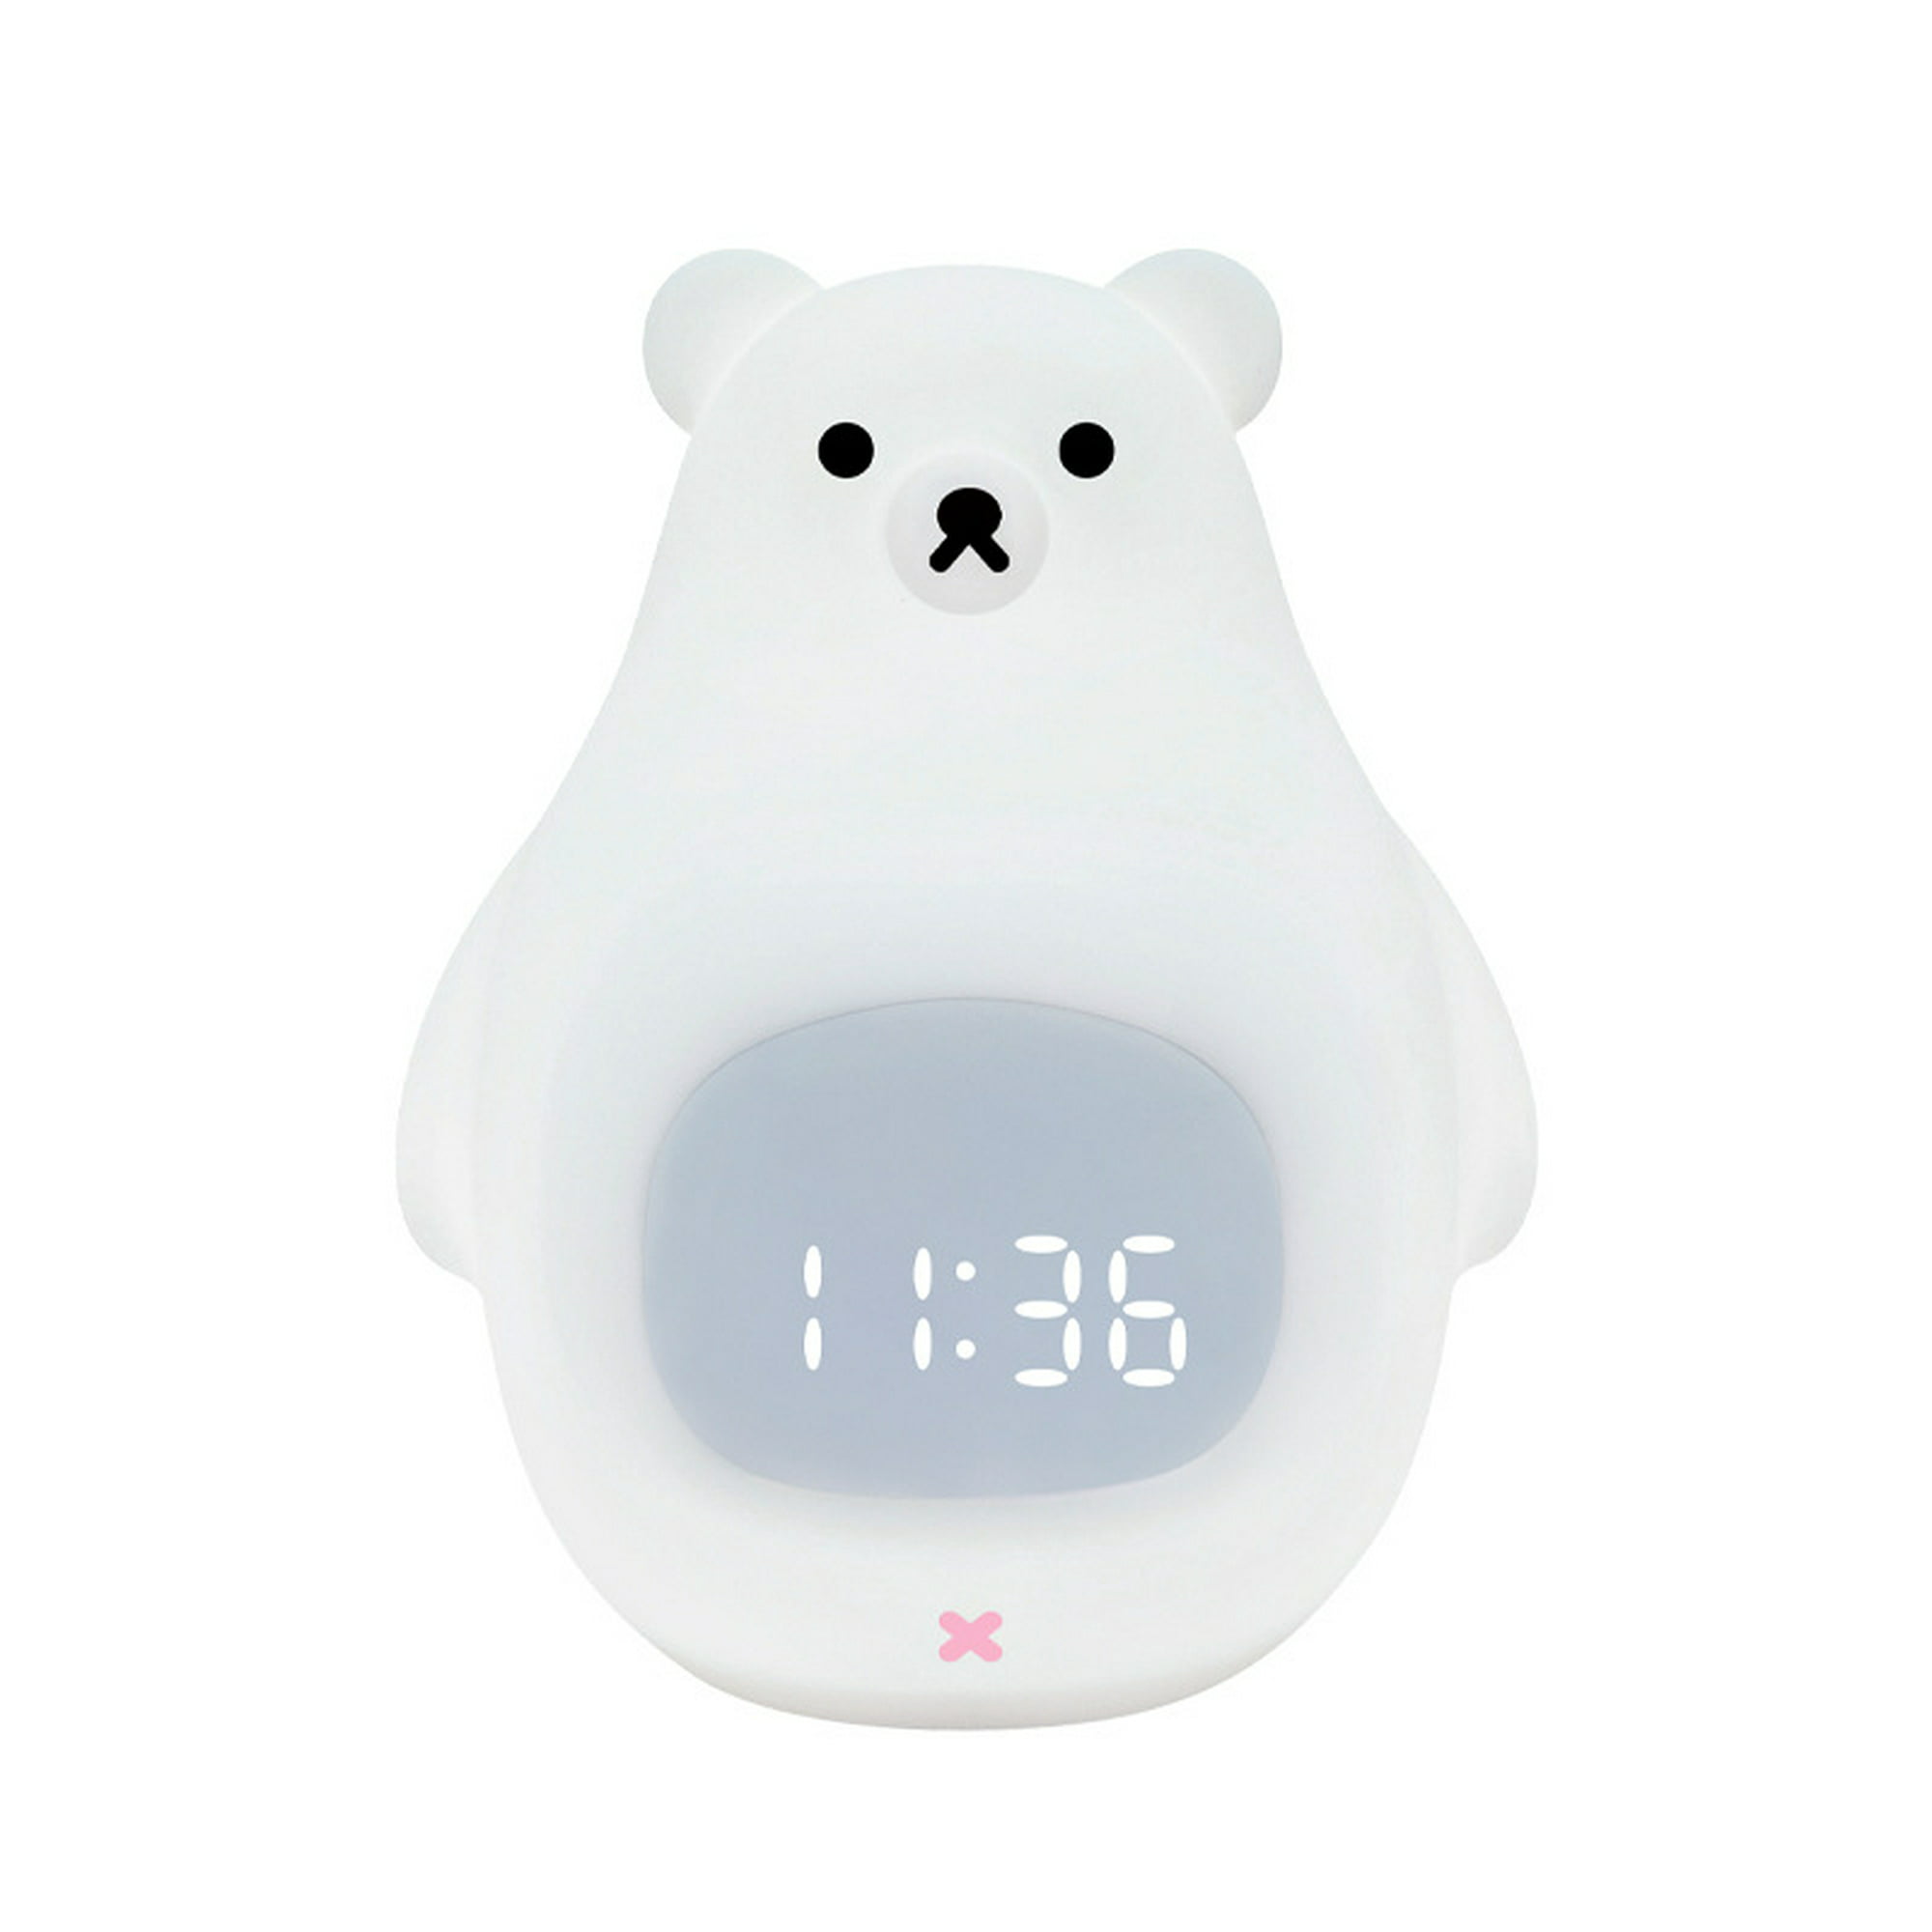  Reloj despertador para niños, reloj despertador digital para  niños, lindo reloj despertador de conejo para niñas, reloj despertador de  ruido blanco, luz nocturna con USB, reloj despertador infantil para  dormitorio de